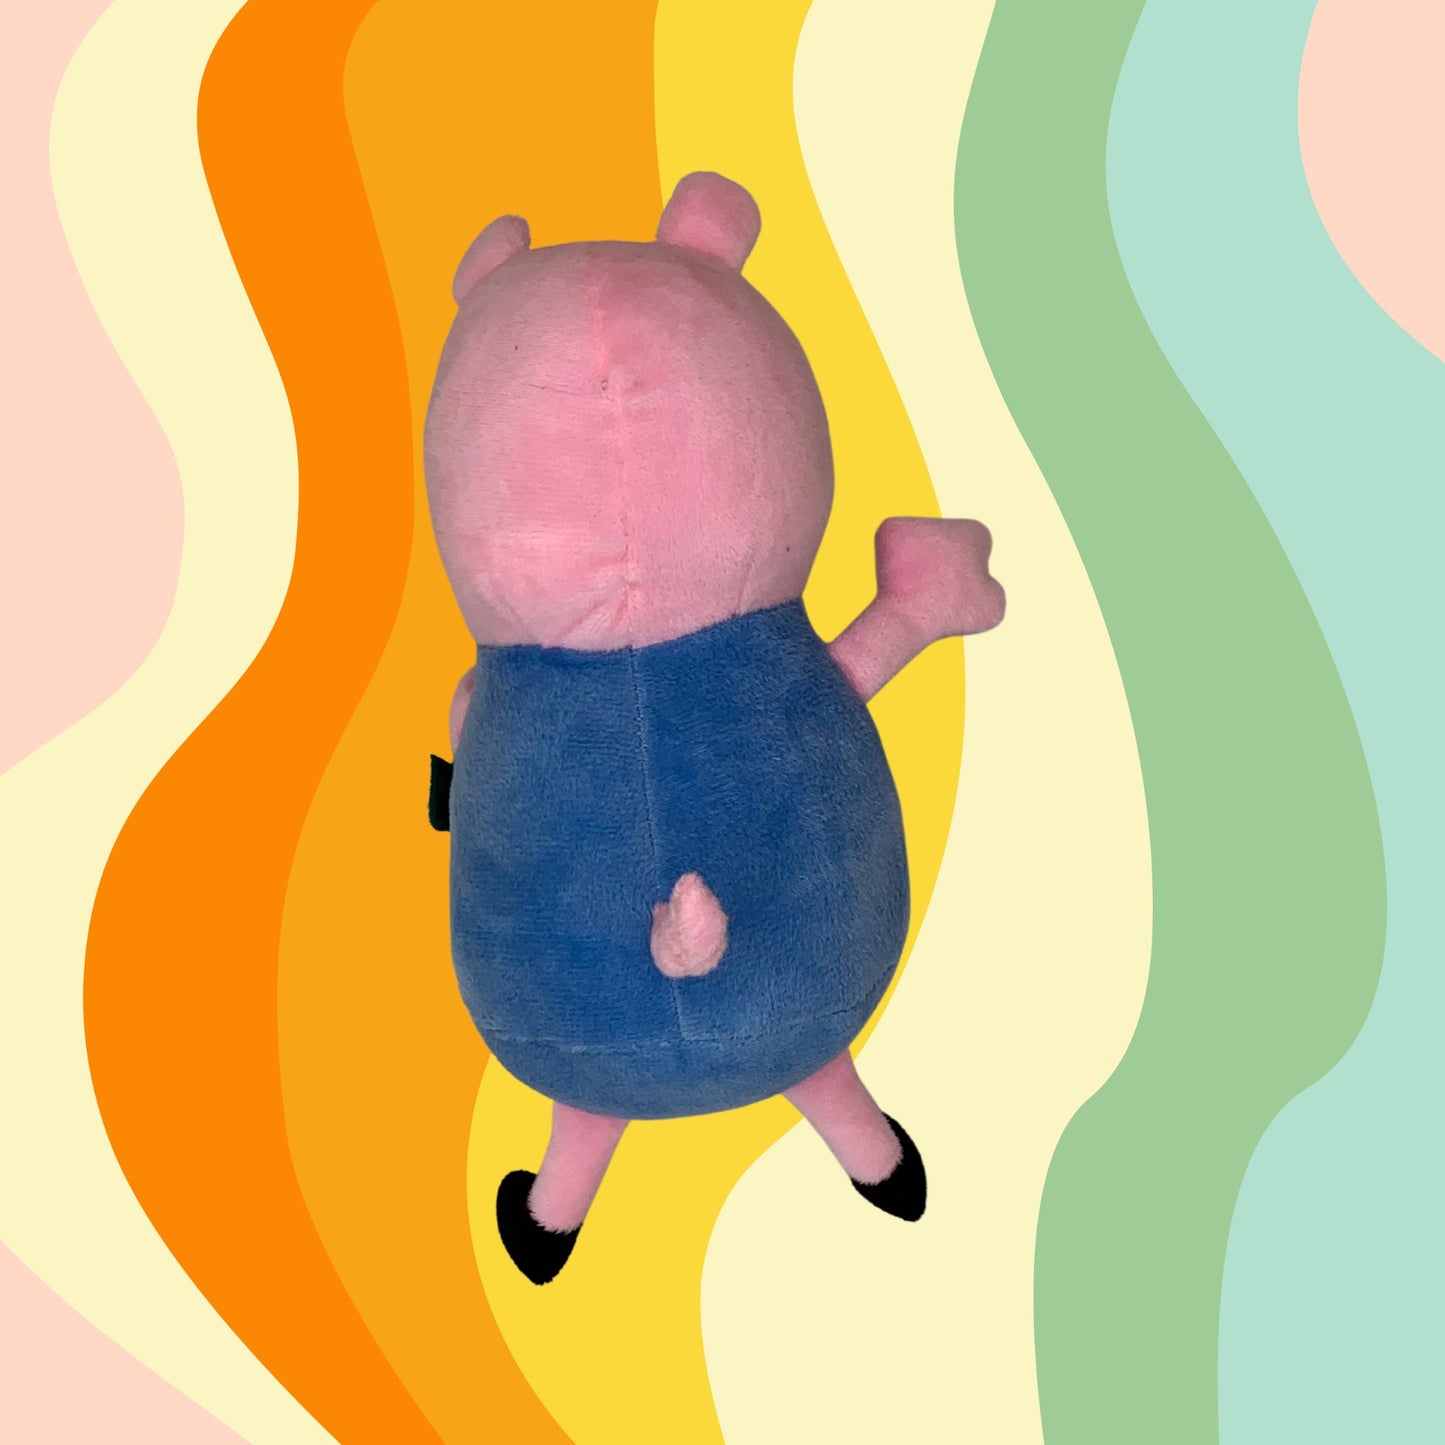 George Peppa Pig Kit Regalo Peluche Cariñoso + Taza Mágica Personalizada